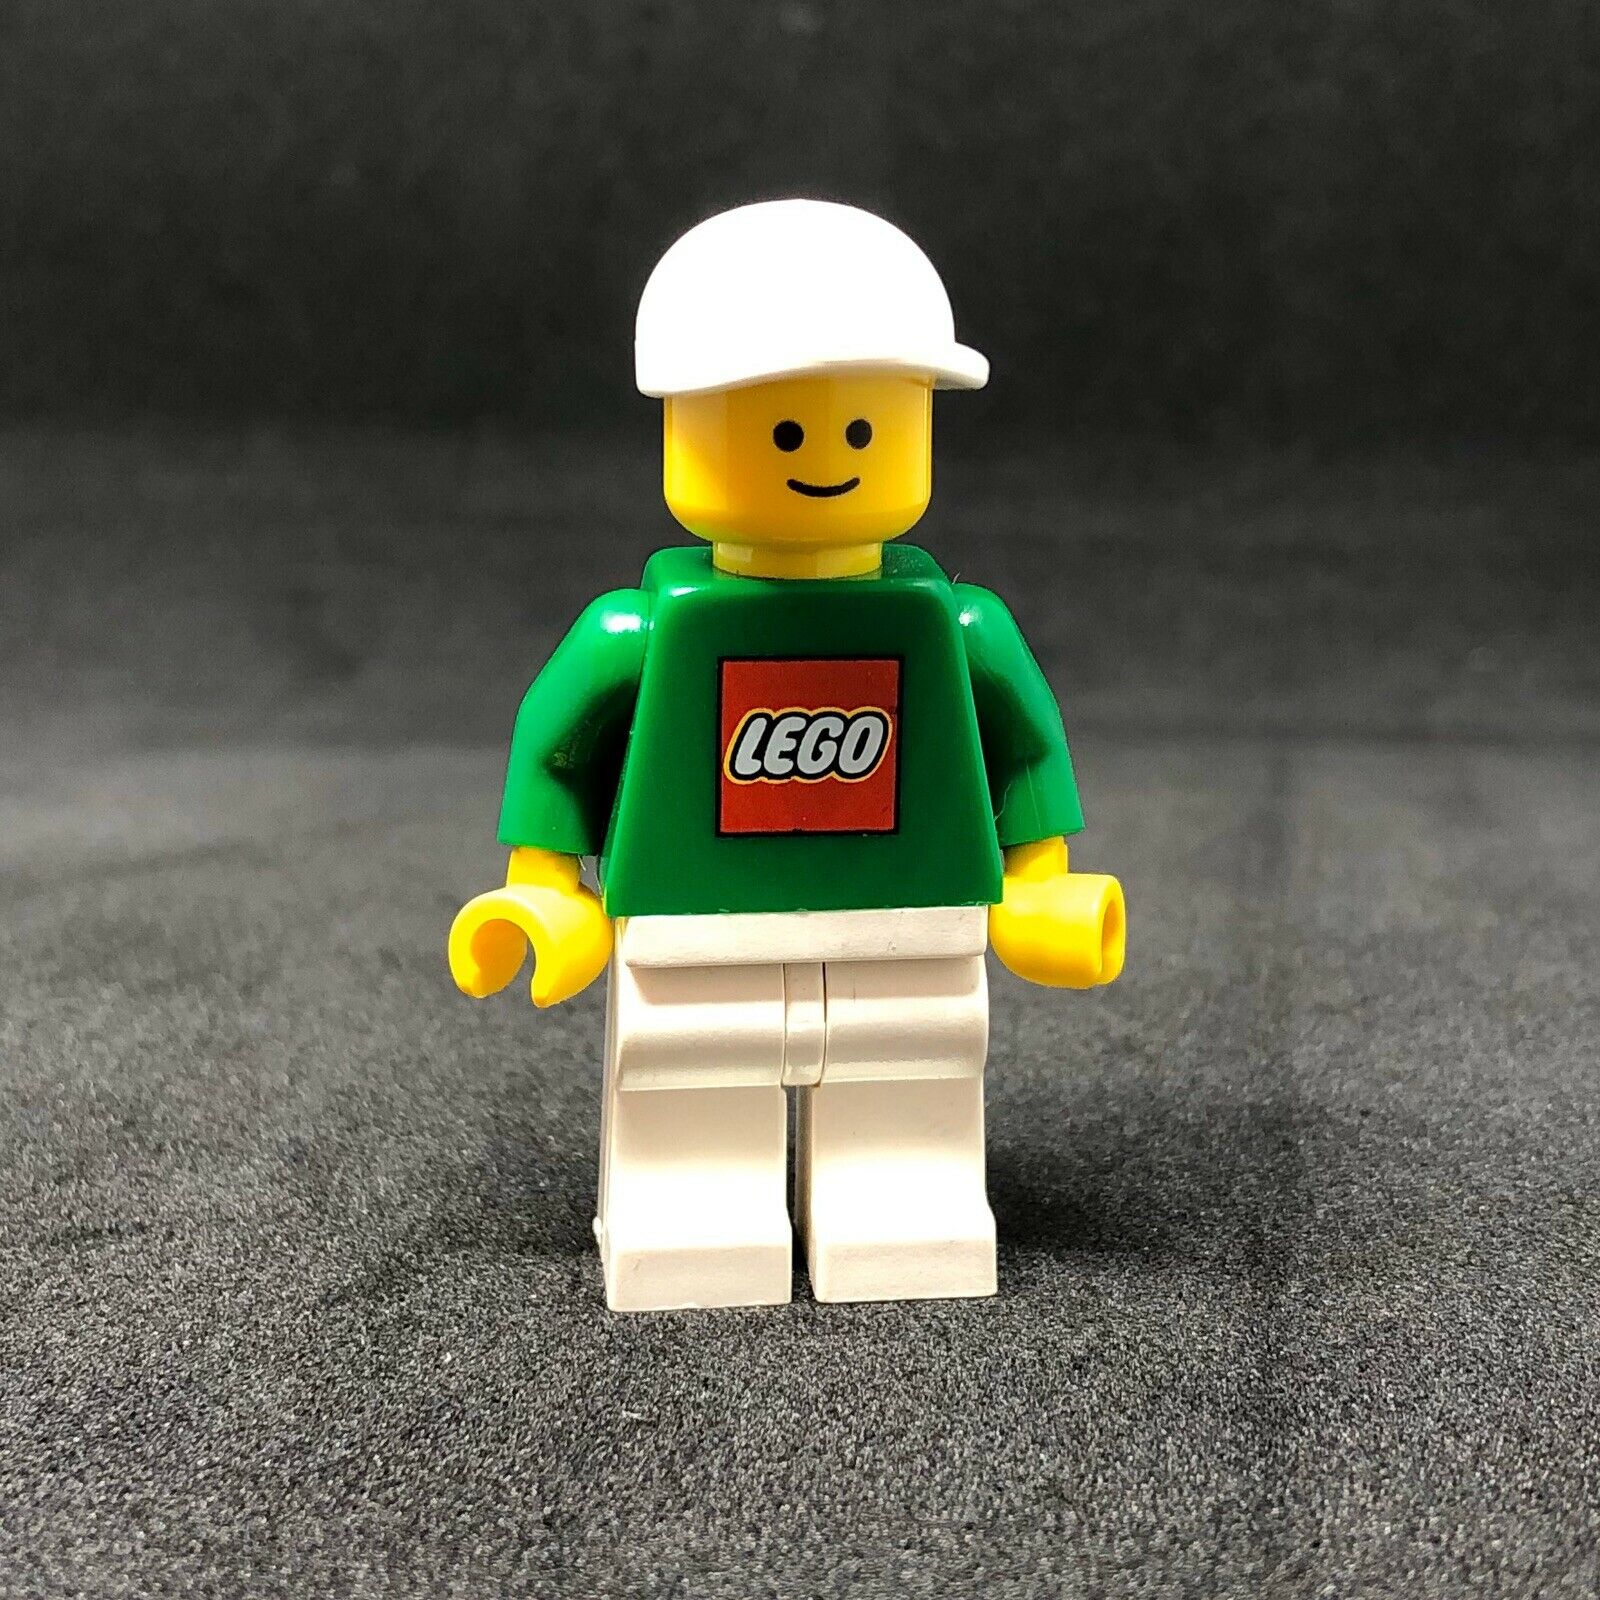 Rare LEGO World 2015 minifigure - Instructions Minifigure Minifigure Price